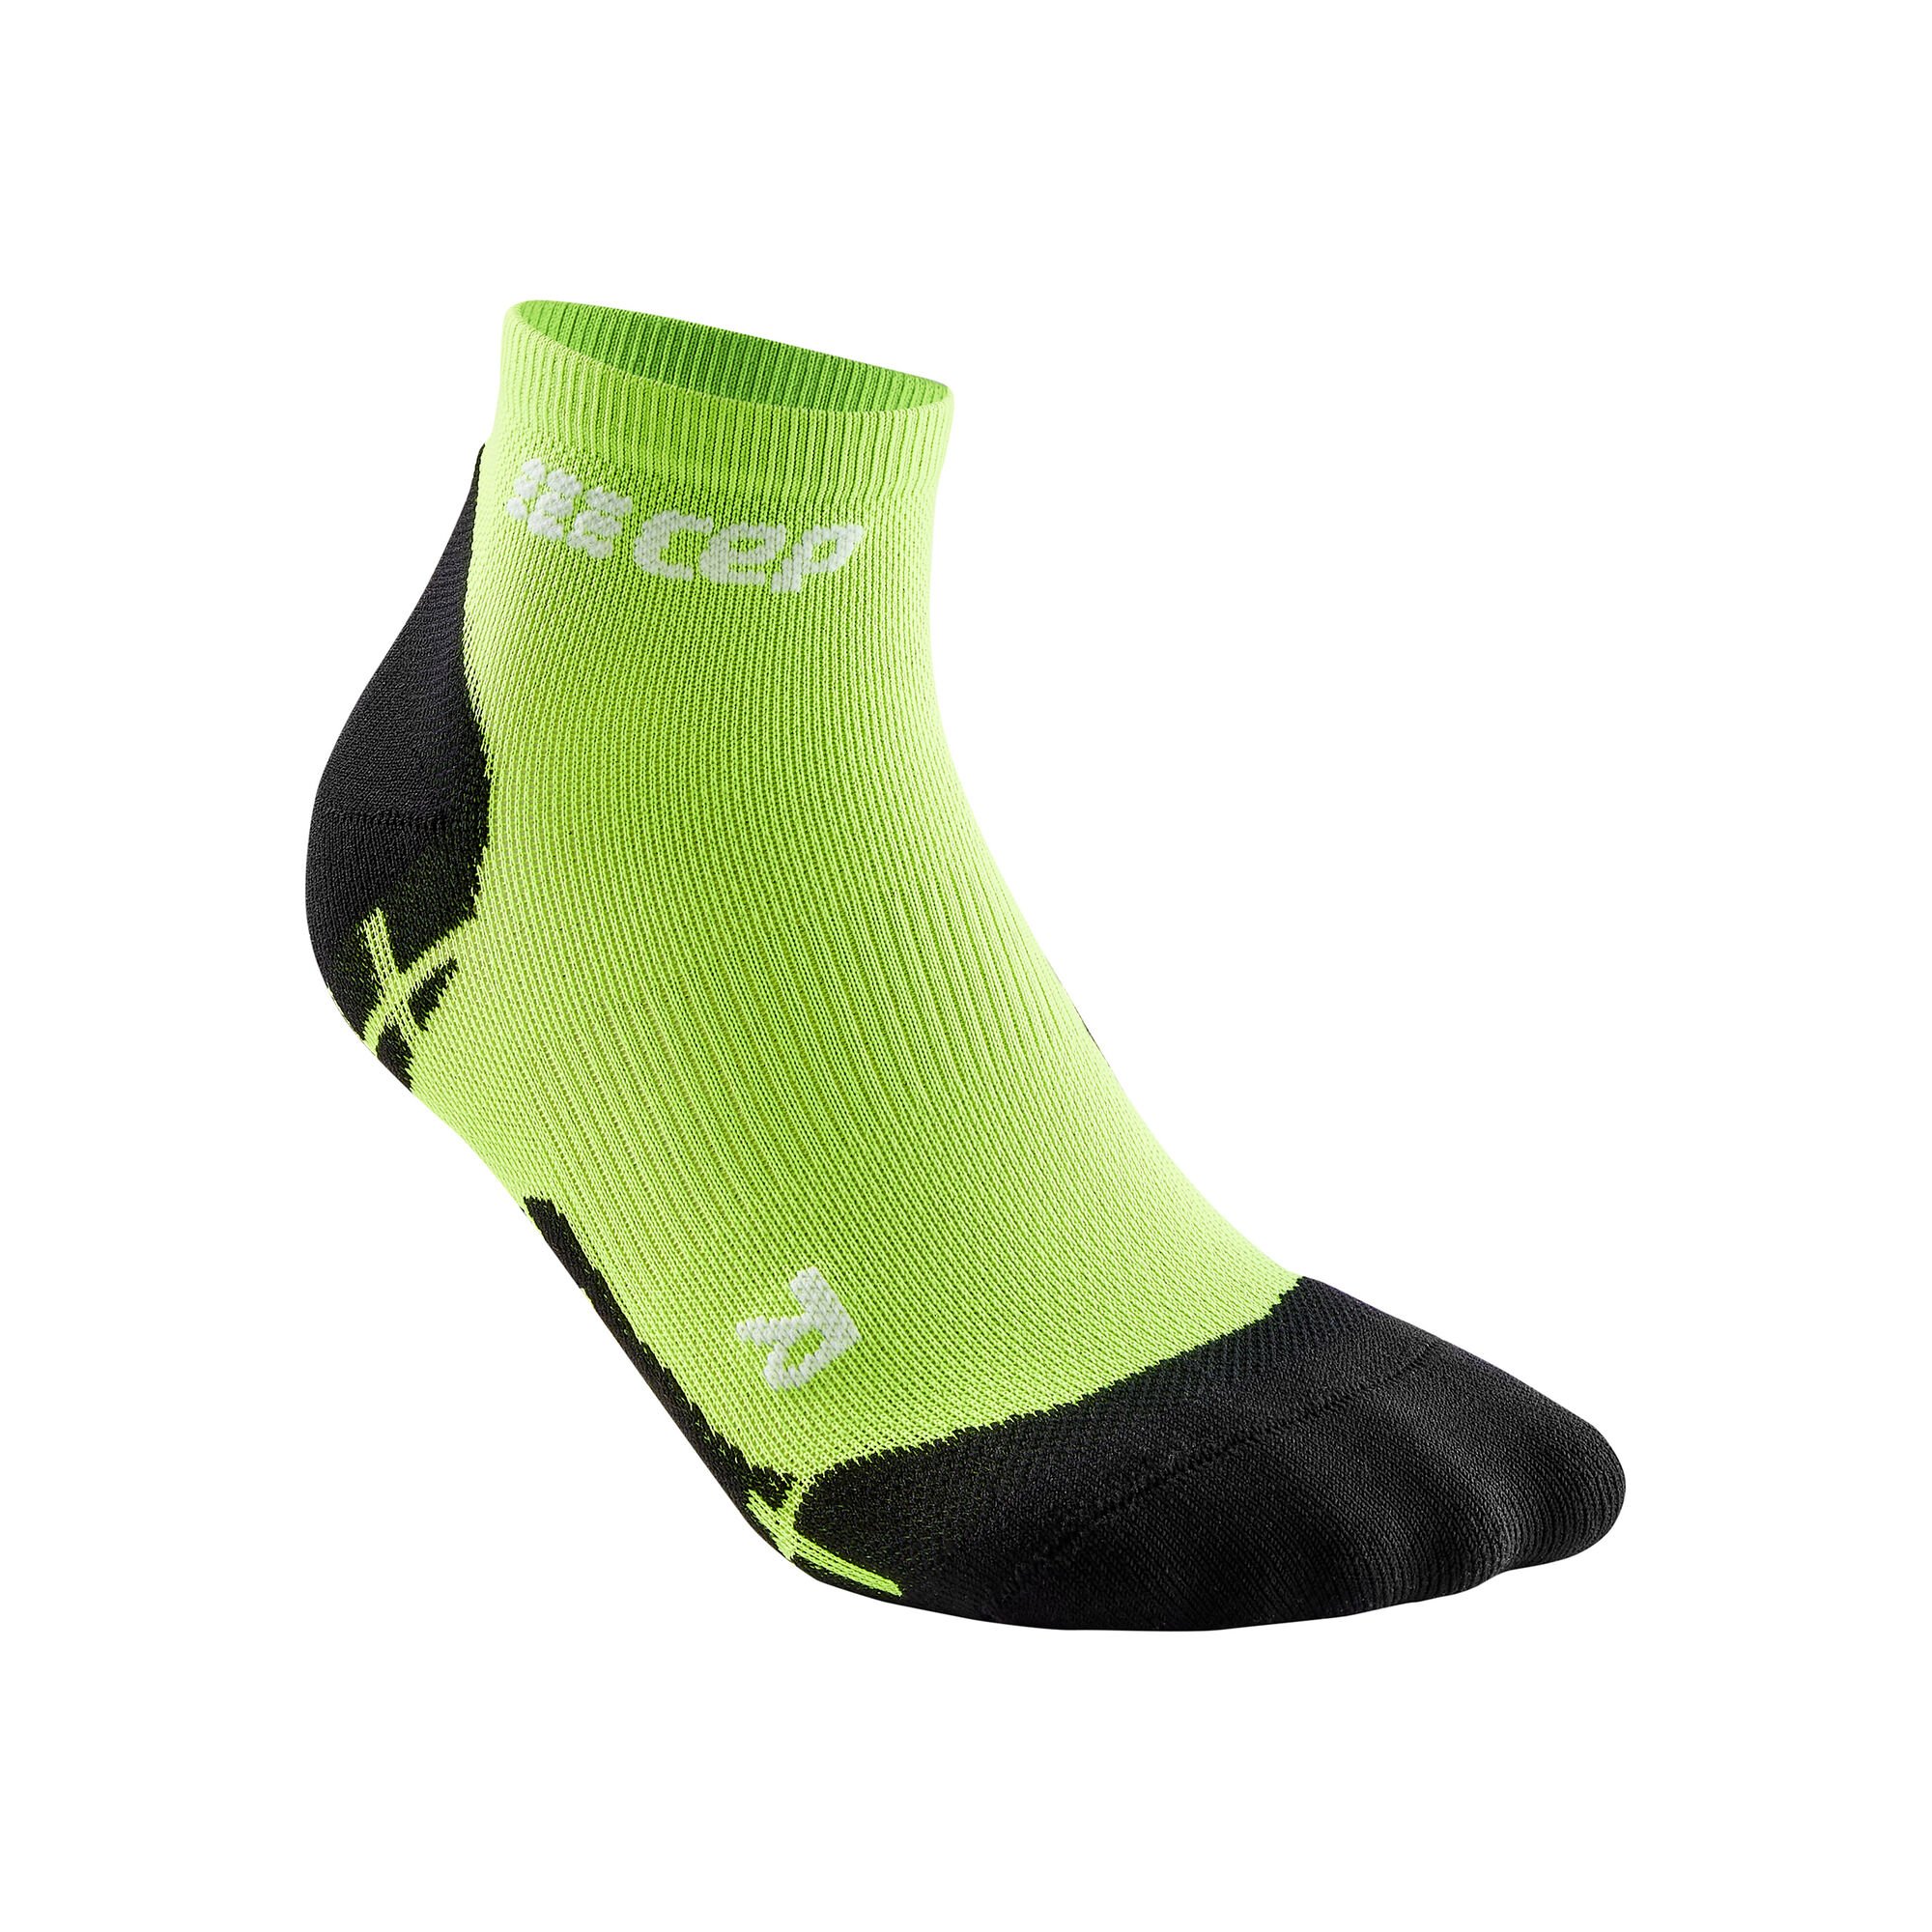 Buy CEP Kompression Ultralight Low Cut Compression Socks Men Green, Black  online